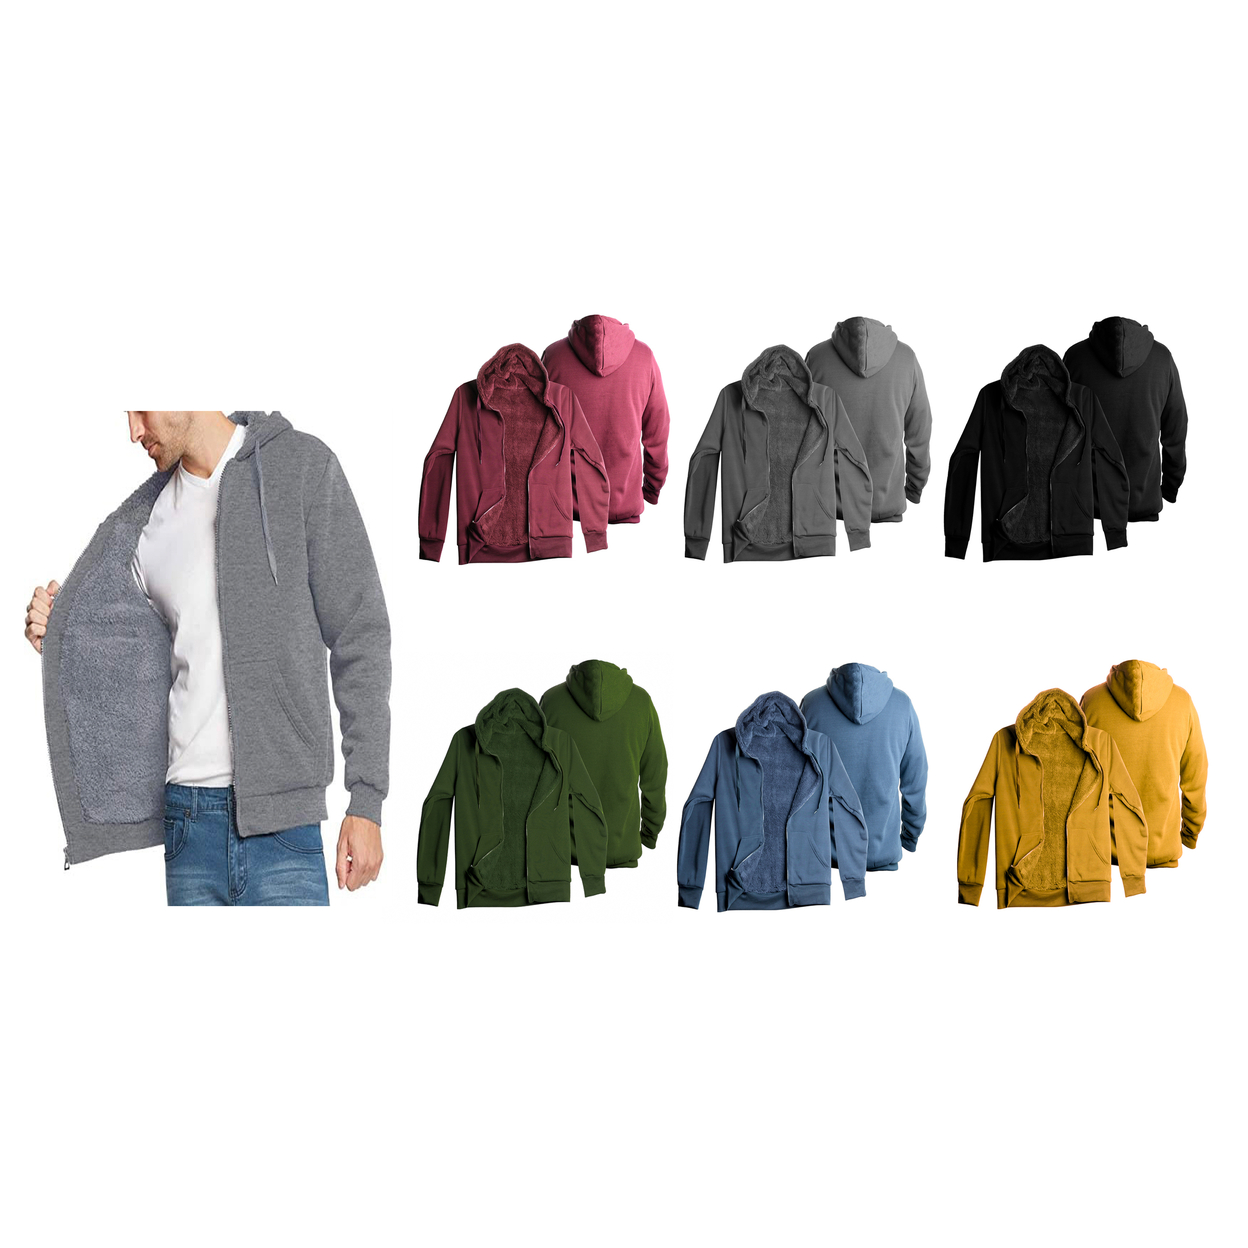 Men's Big & Tall Heavyweight Soft Sherpa Lined Fleece Zip-Up Hoodie Sweater Jacket - Navy, 3x